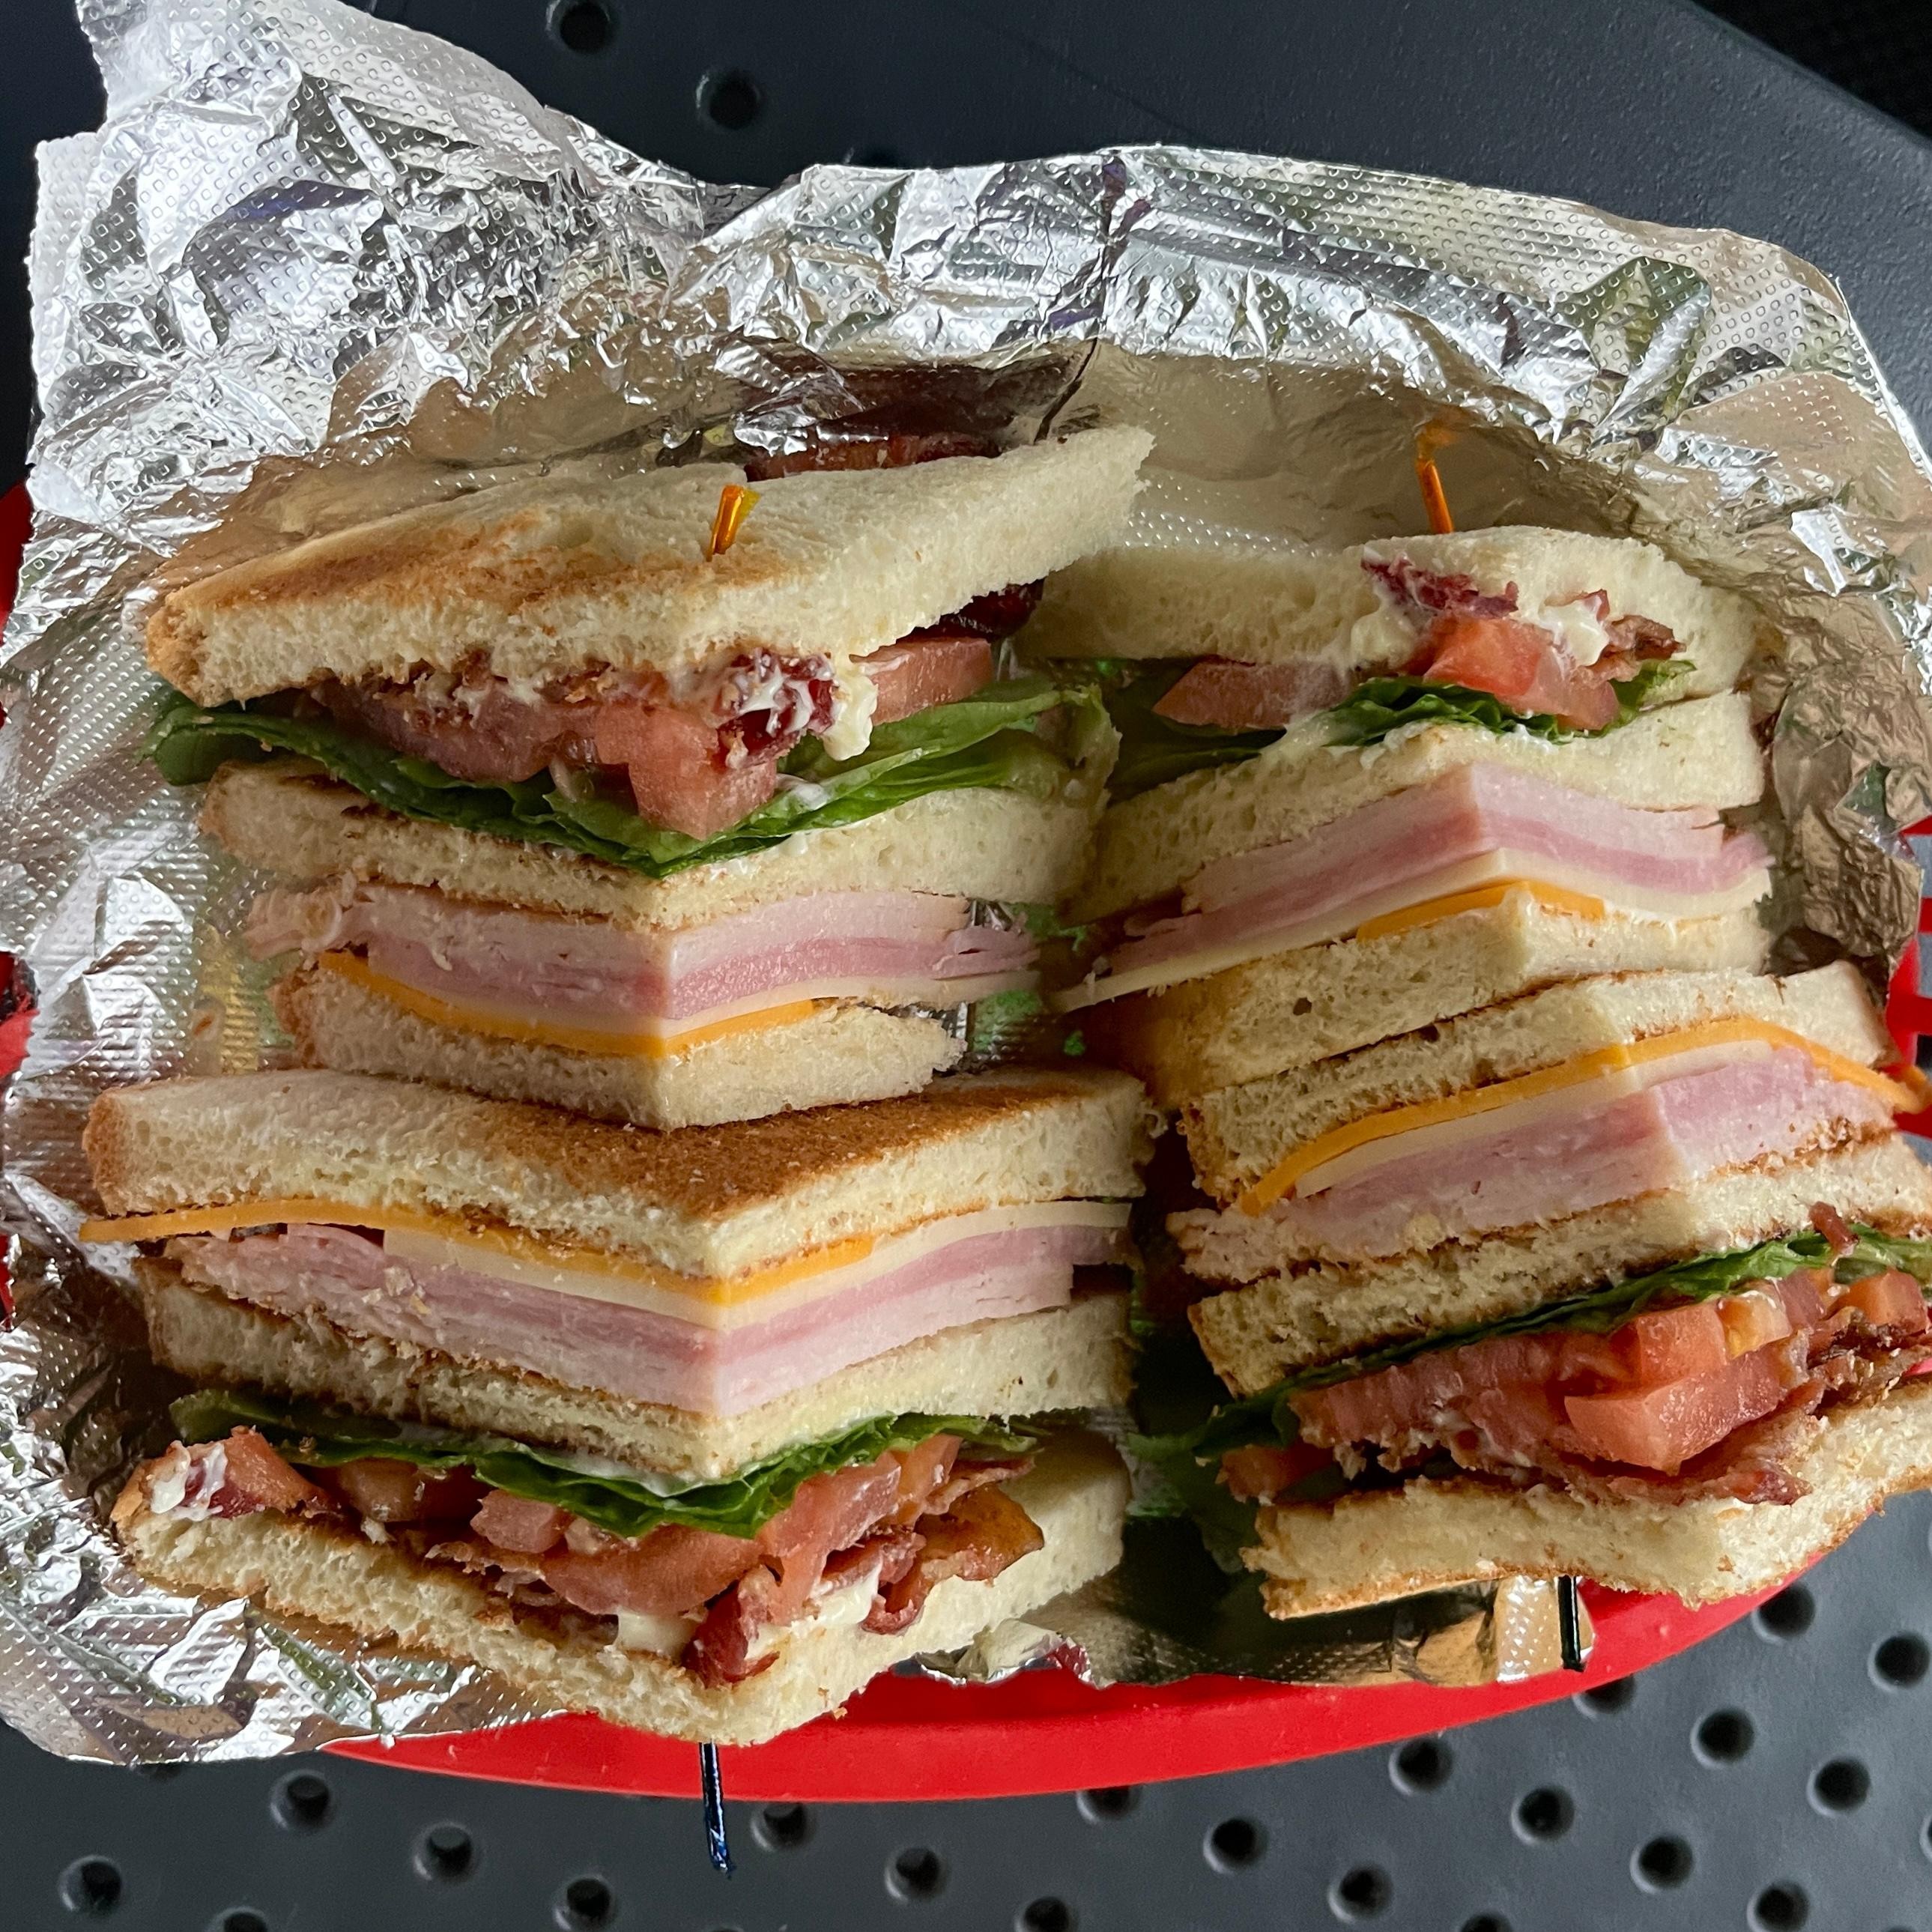 Capital City Club Sandwich